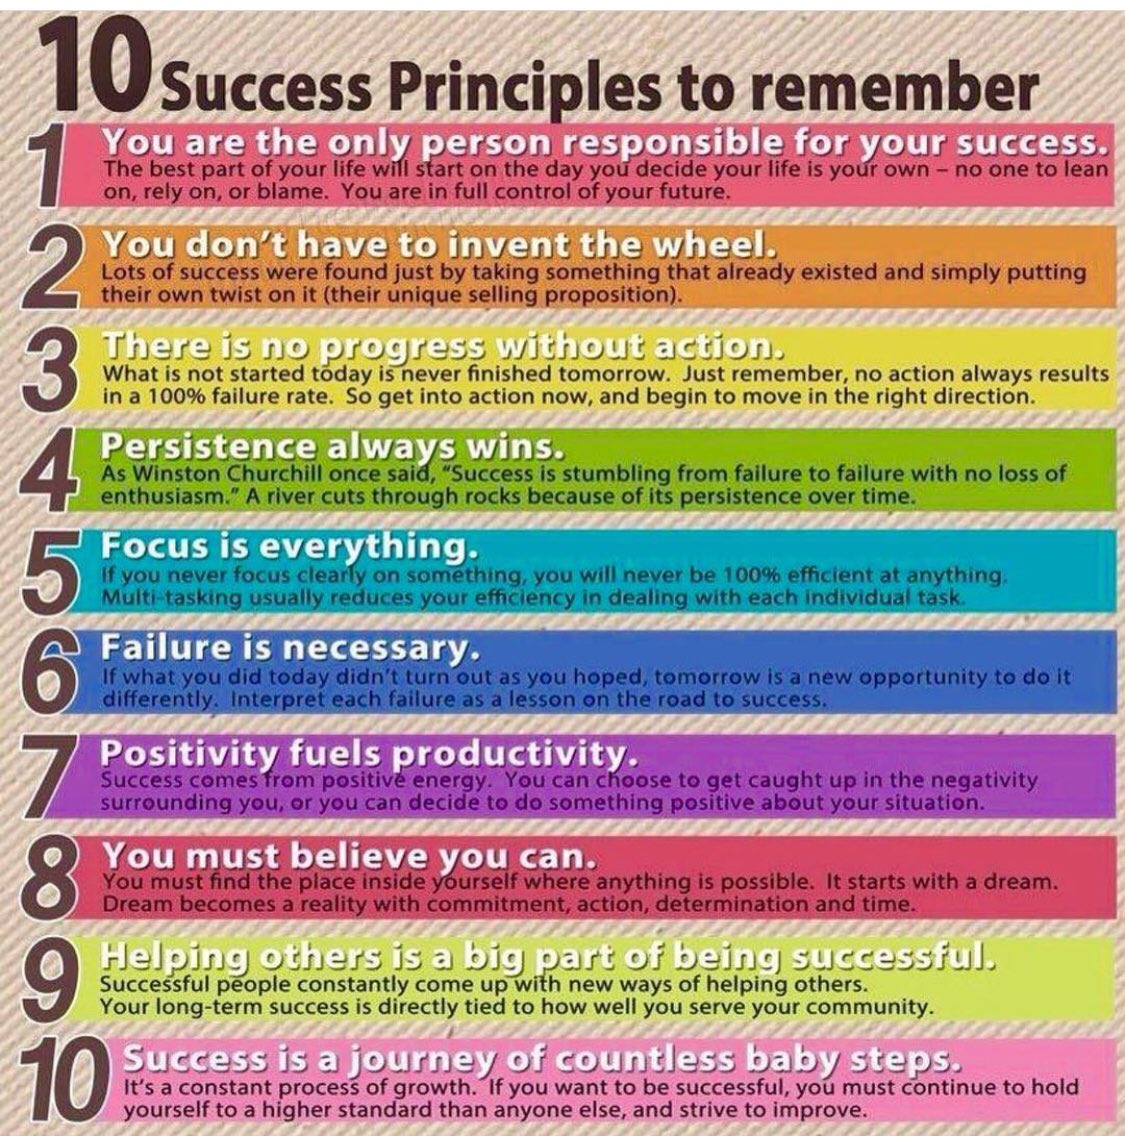 “10 #Success Principles to Remember” (via @10MillionMiler)